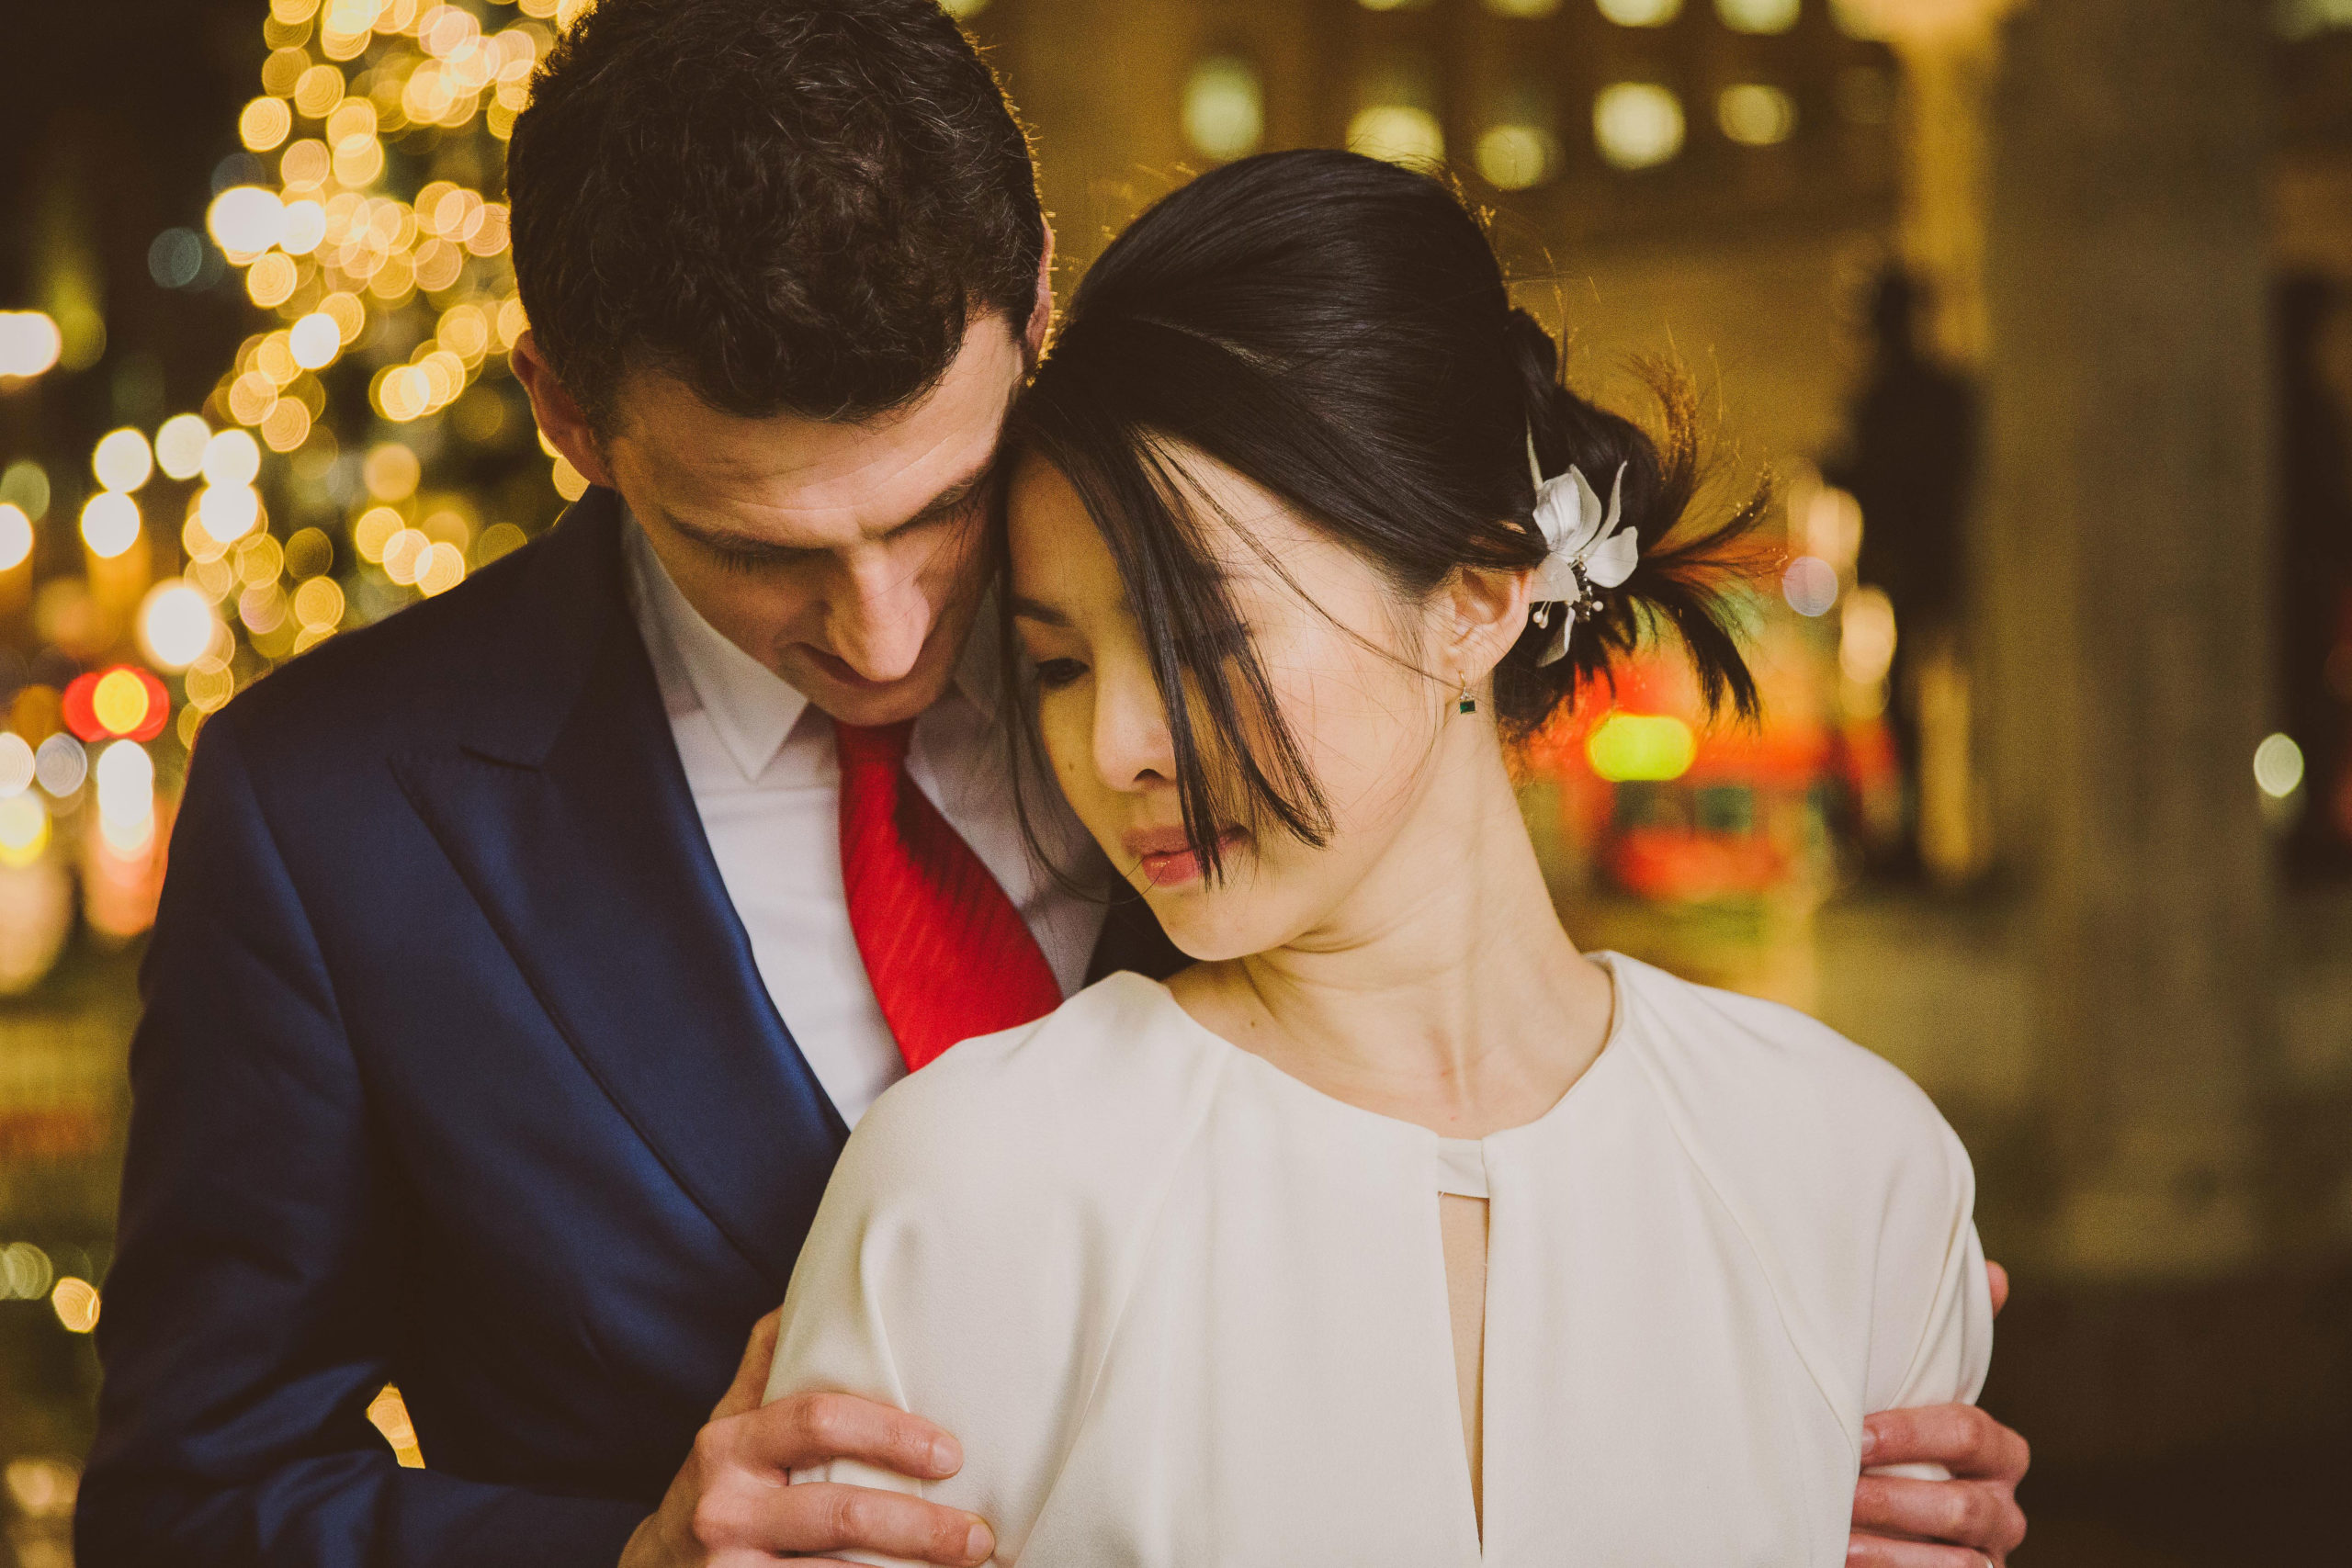 Real wedding: Shanghai magic in London